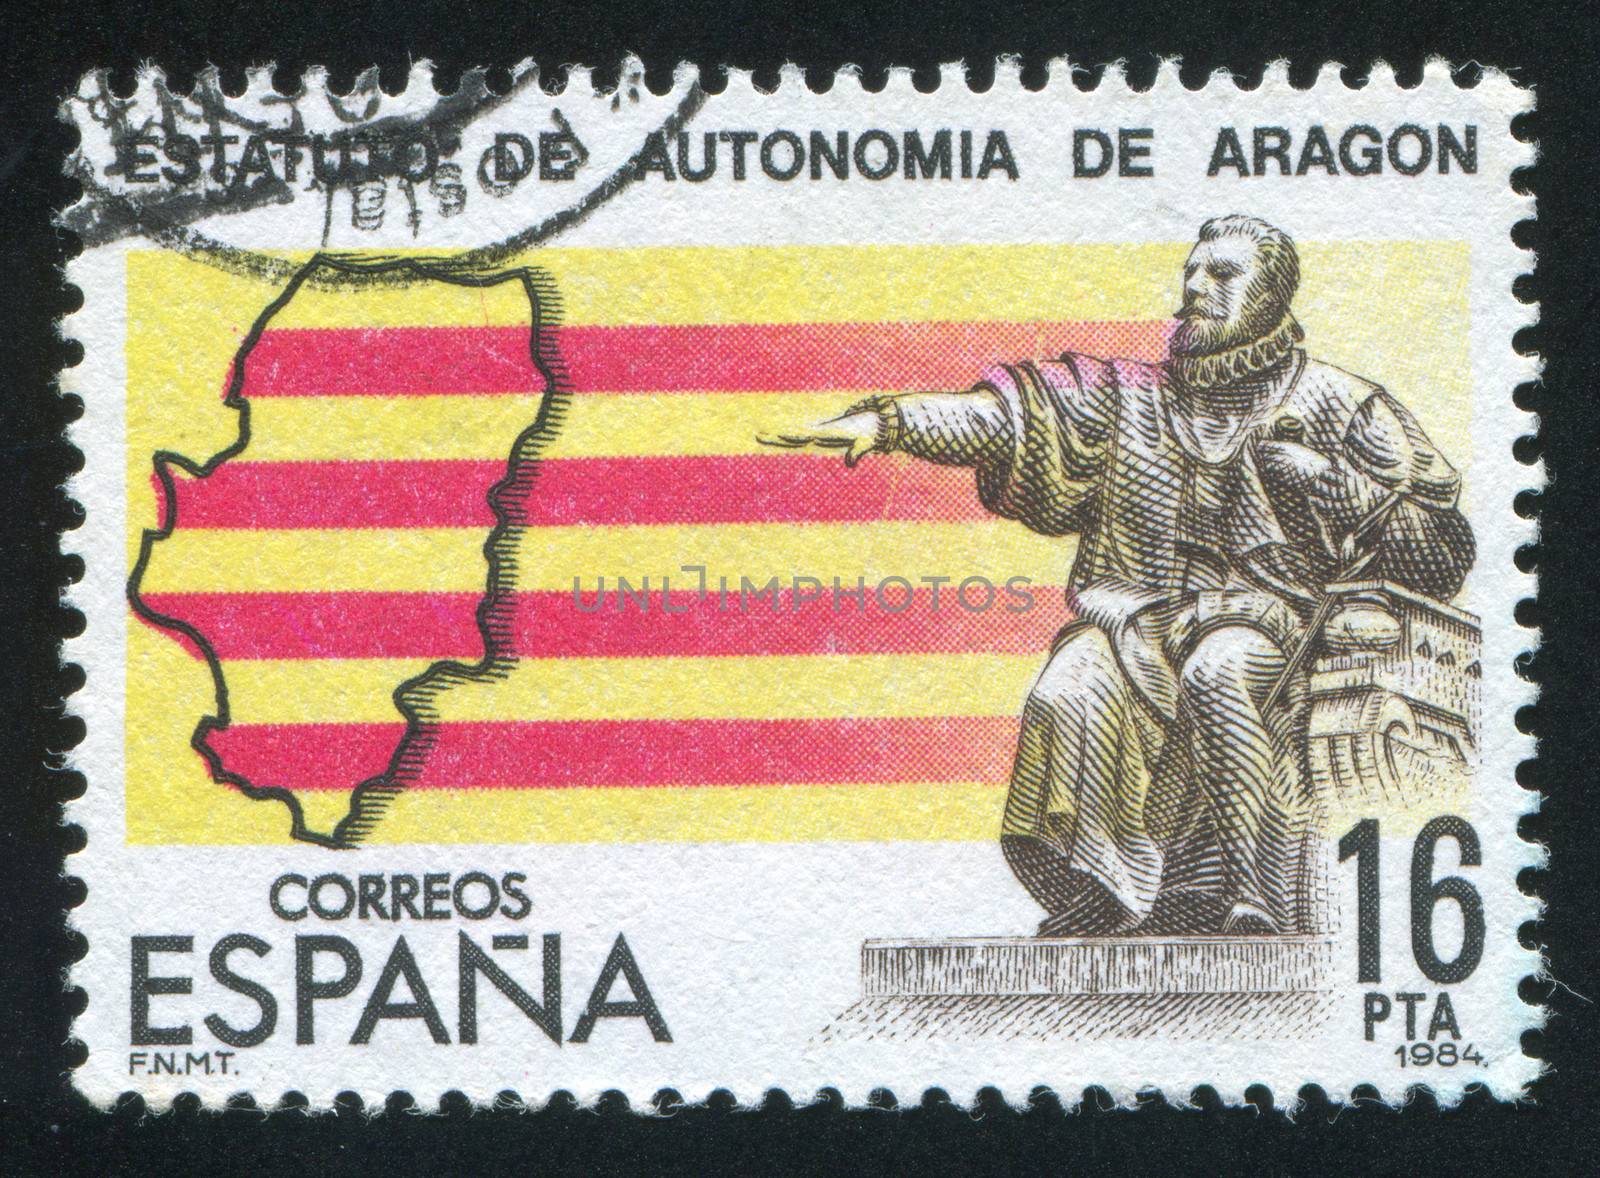 Aragon Statute of Autonomy by rook